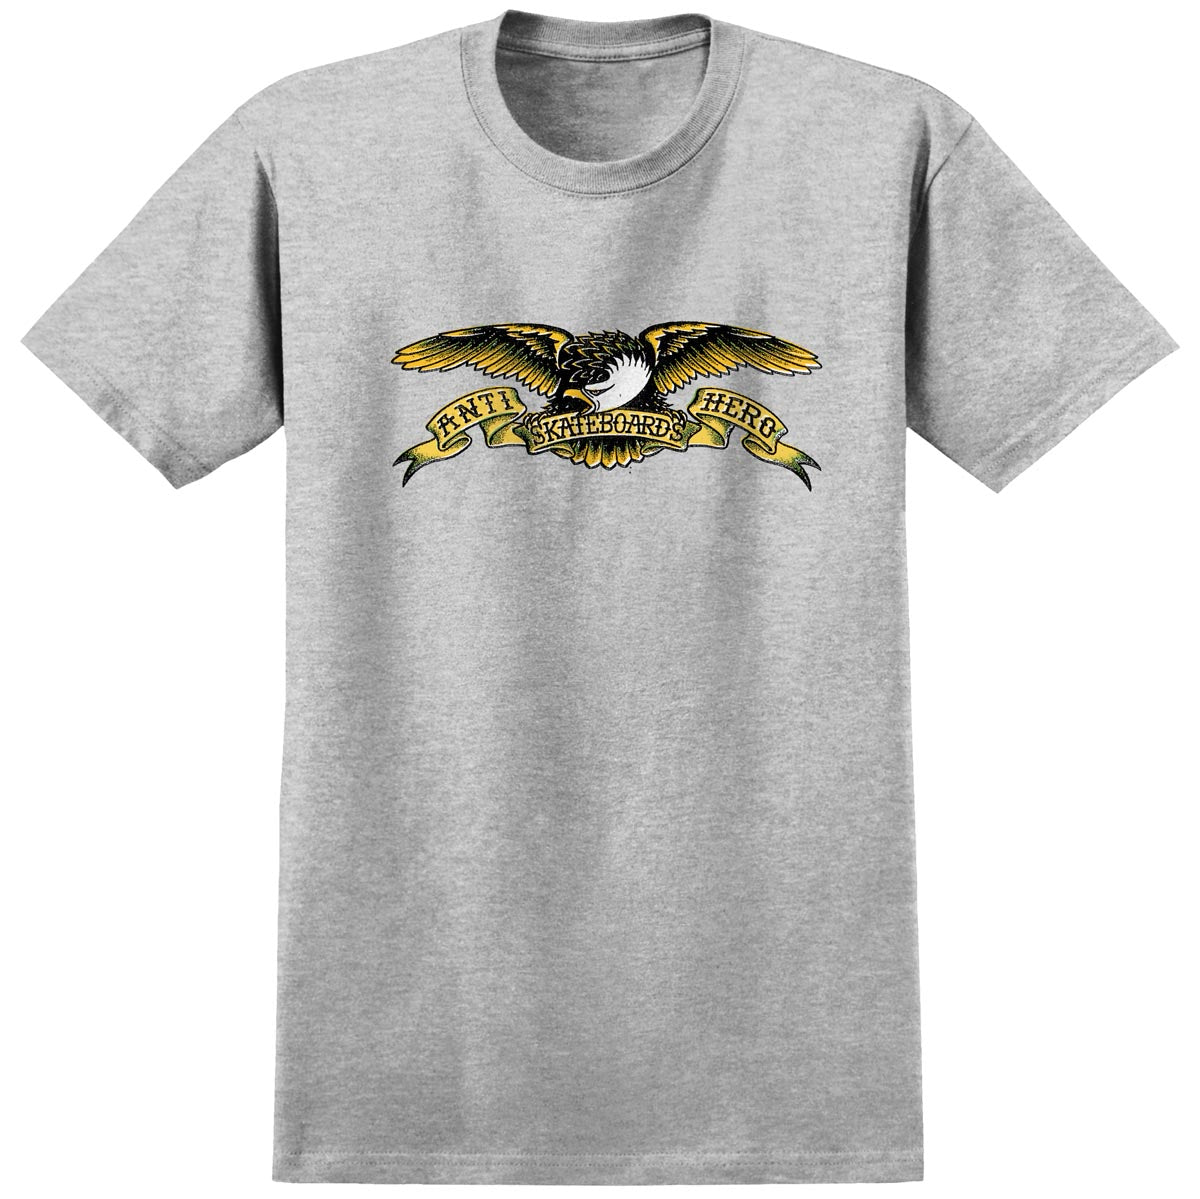 Anti-Hero Misregister Eagle T-Shirt - Heather Grey/Black image 1